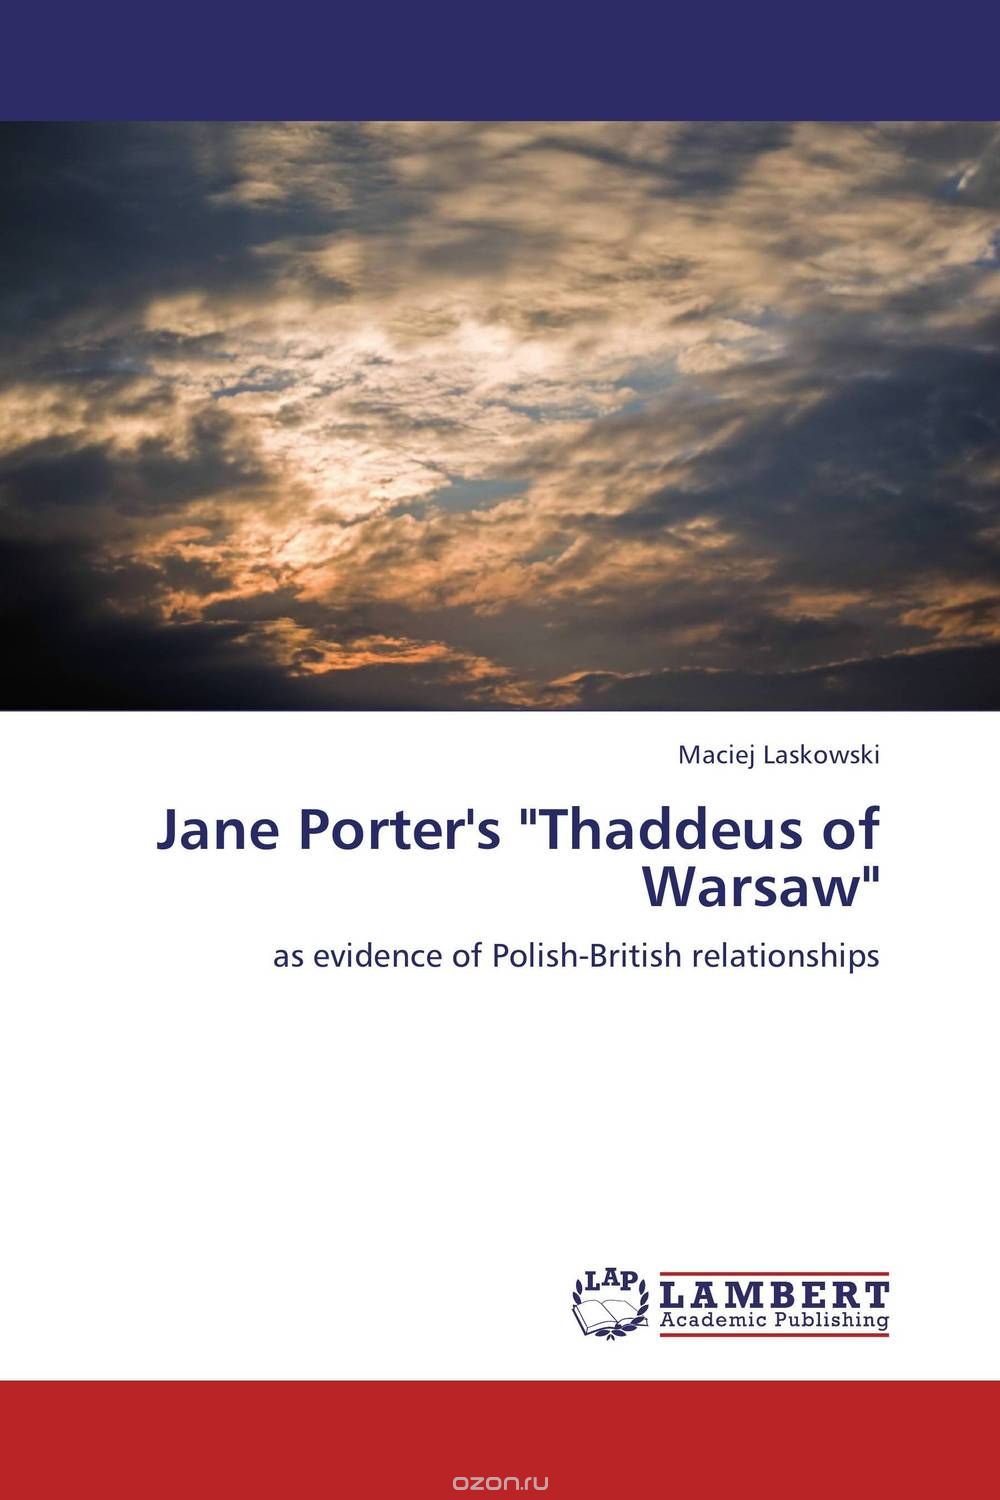 Скачать книгу "Jane Porter's "Thaddeus of Warsaw""